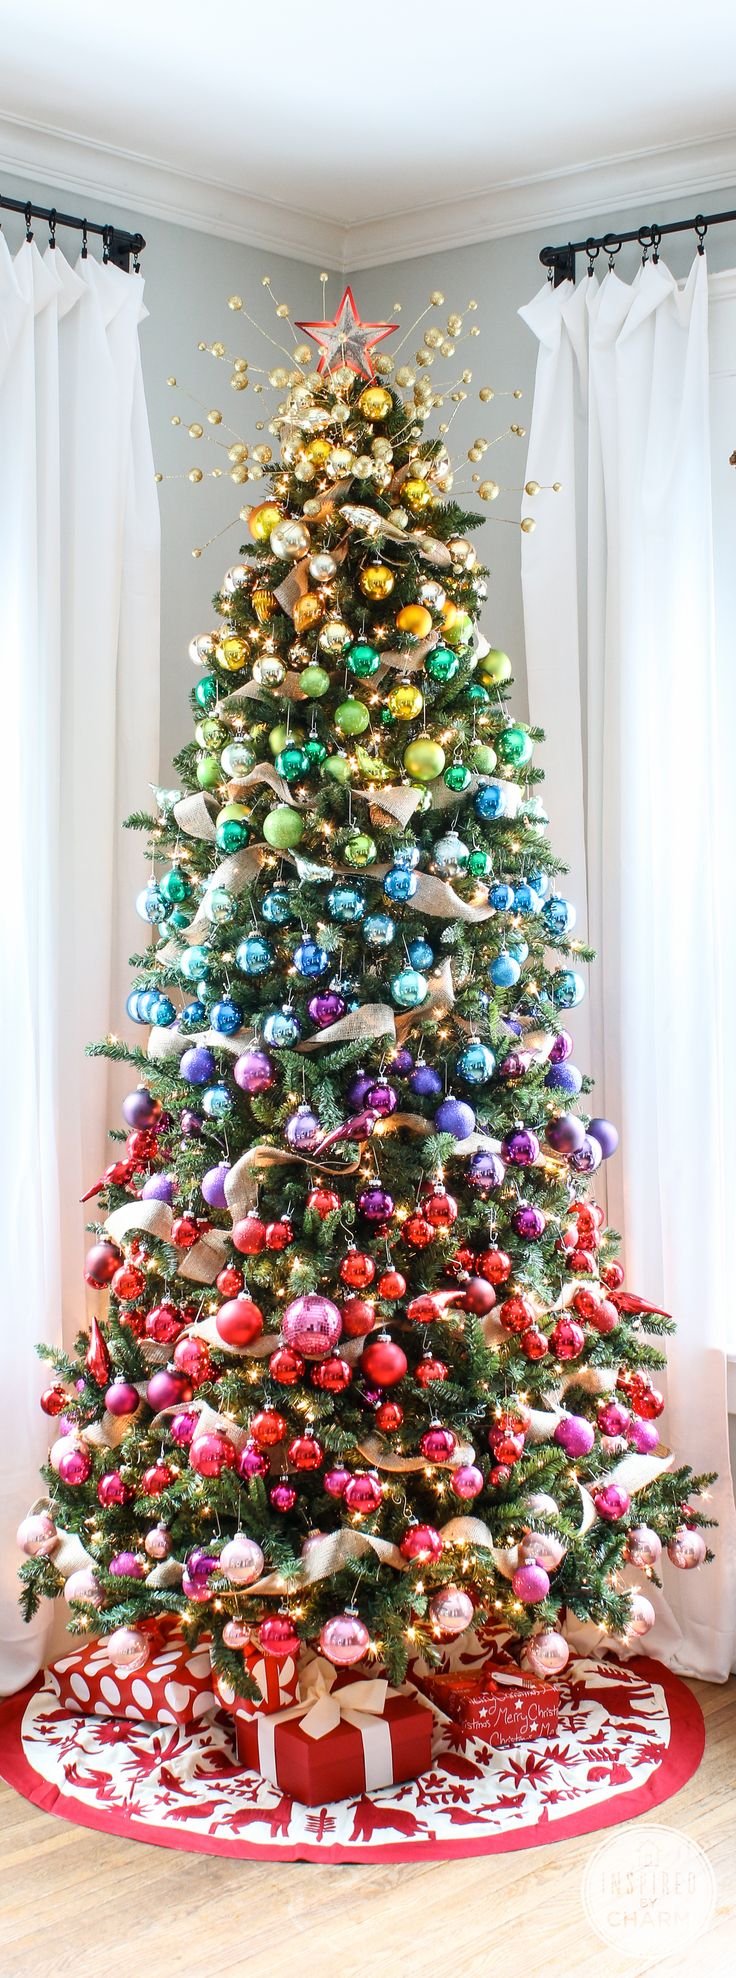 Colorful Christmas Trees